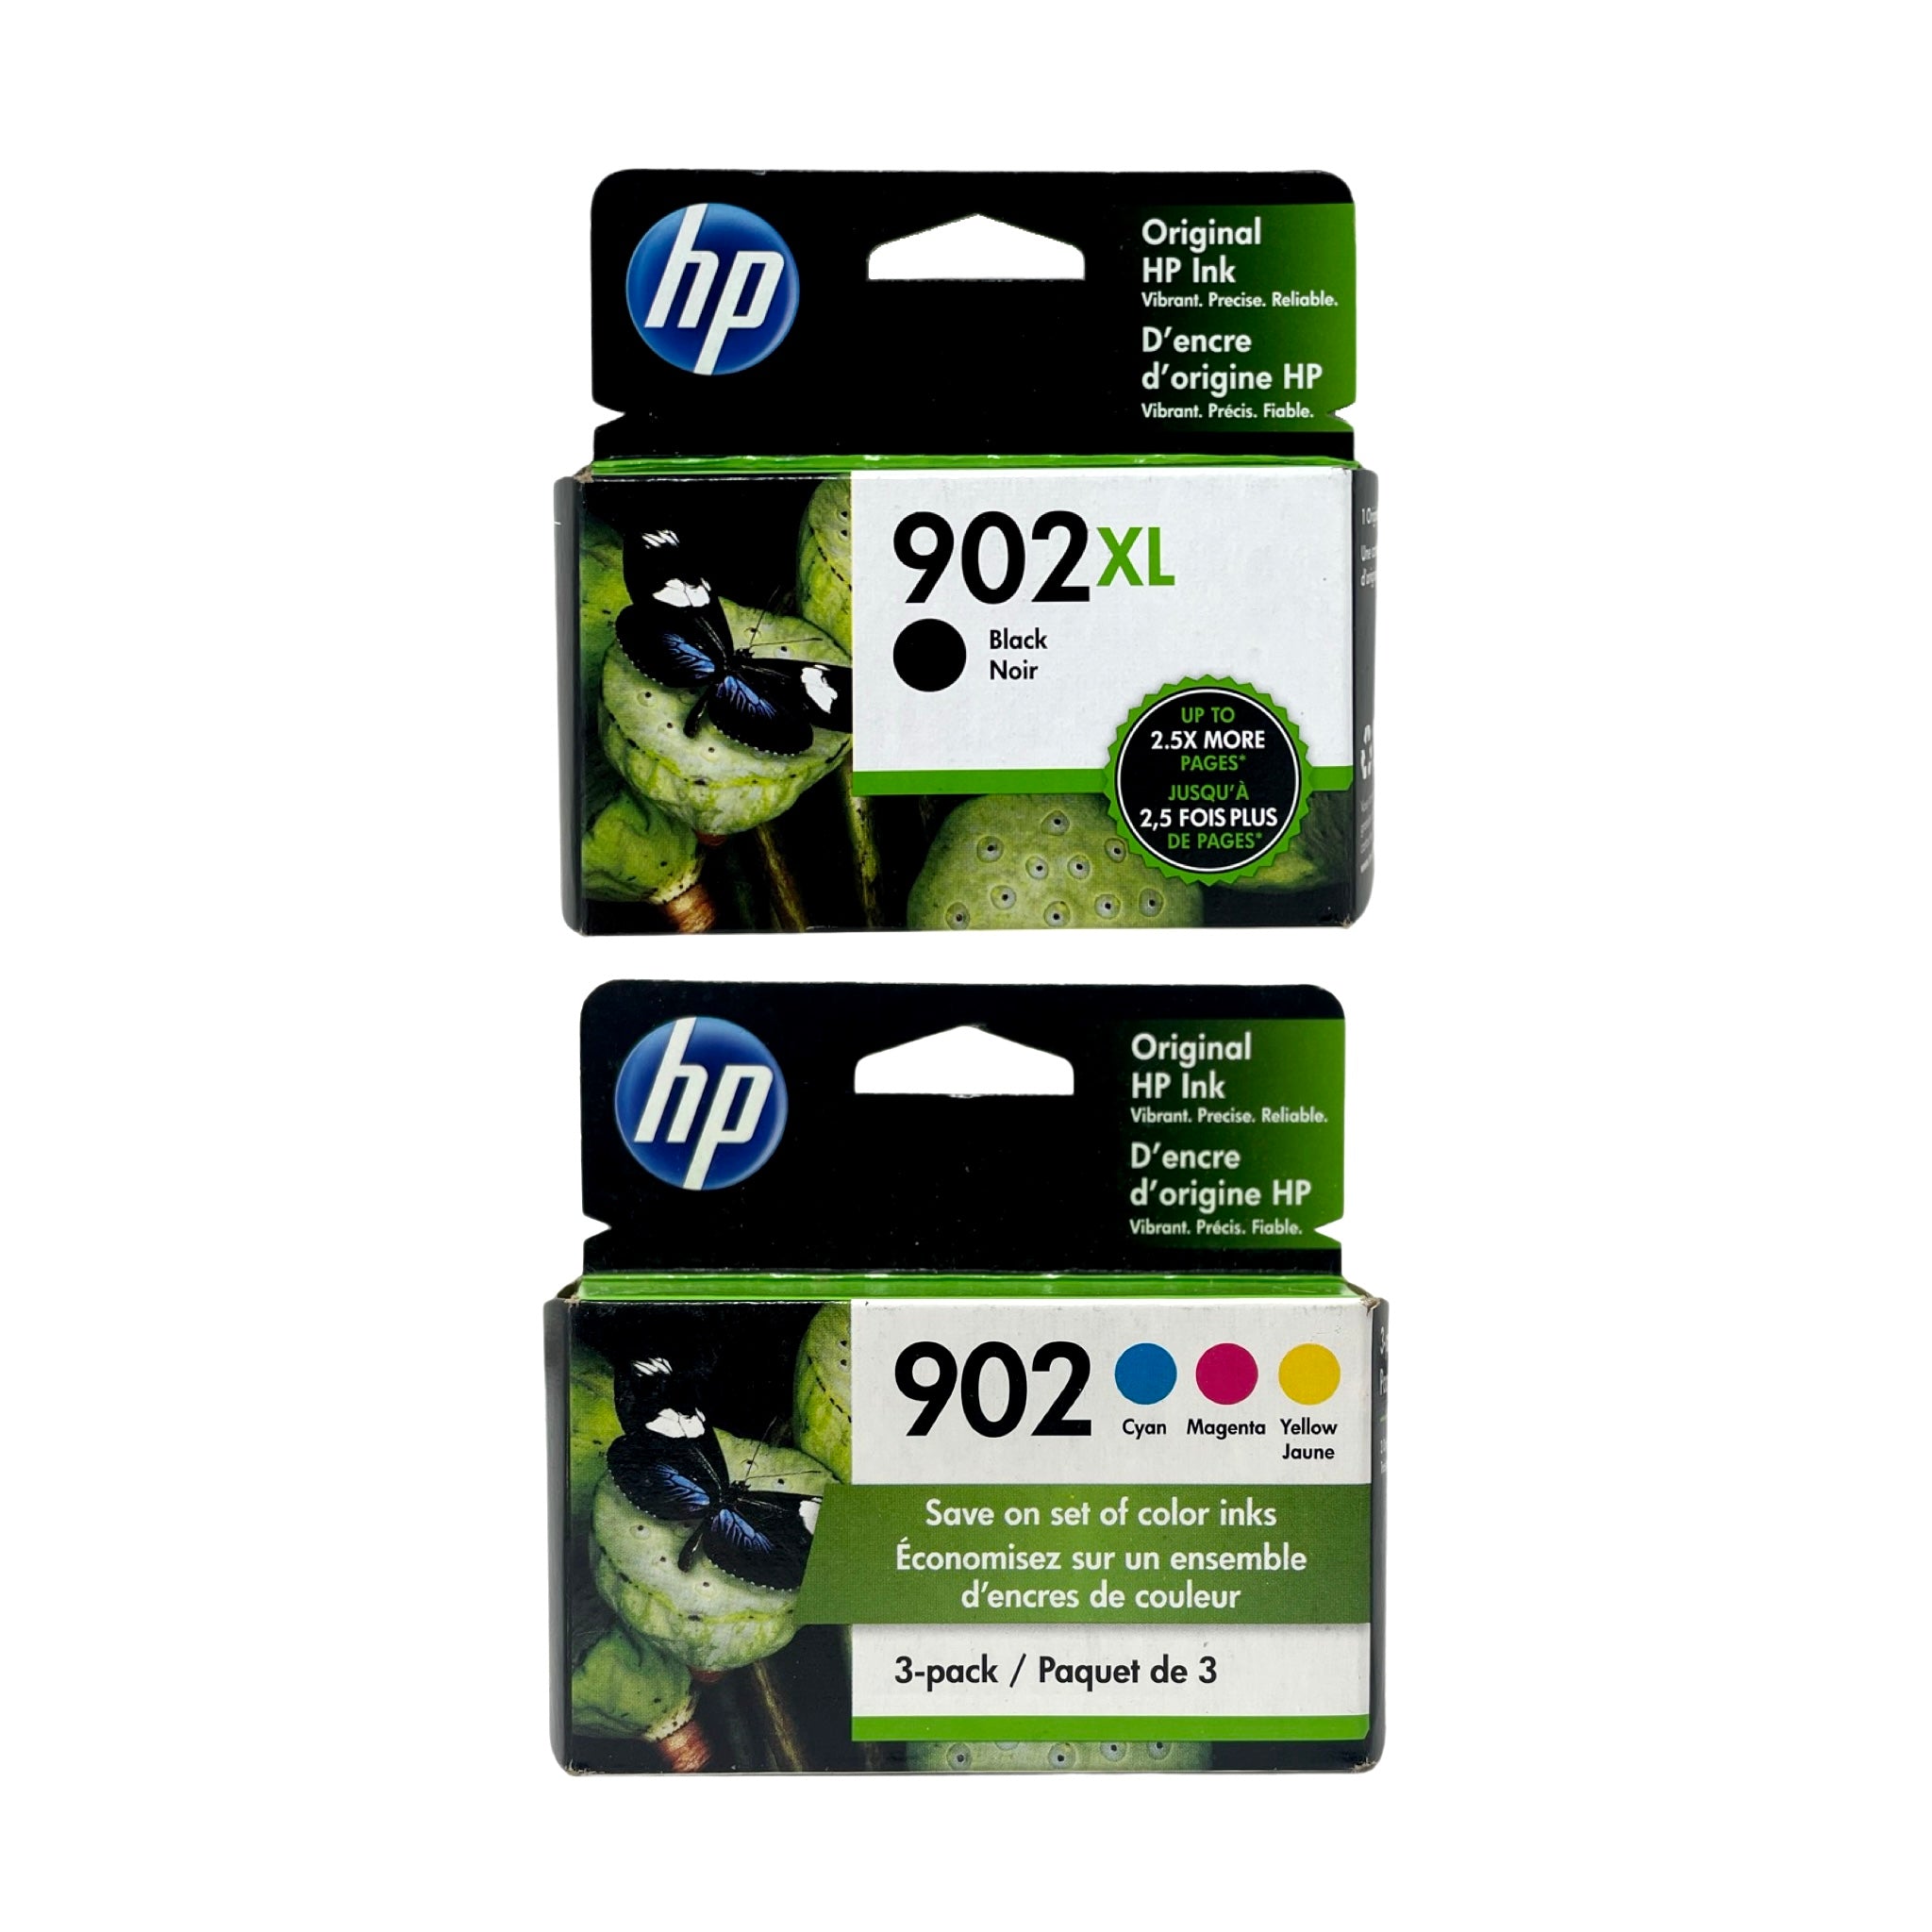 HP 902XL / HP 902 Ink SET - Combo 4 Pack -Black Cyan Magenta Yellow - Original HP LaserJet Ink Cartridges (T0A39AN)